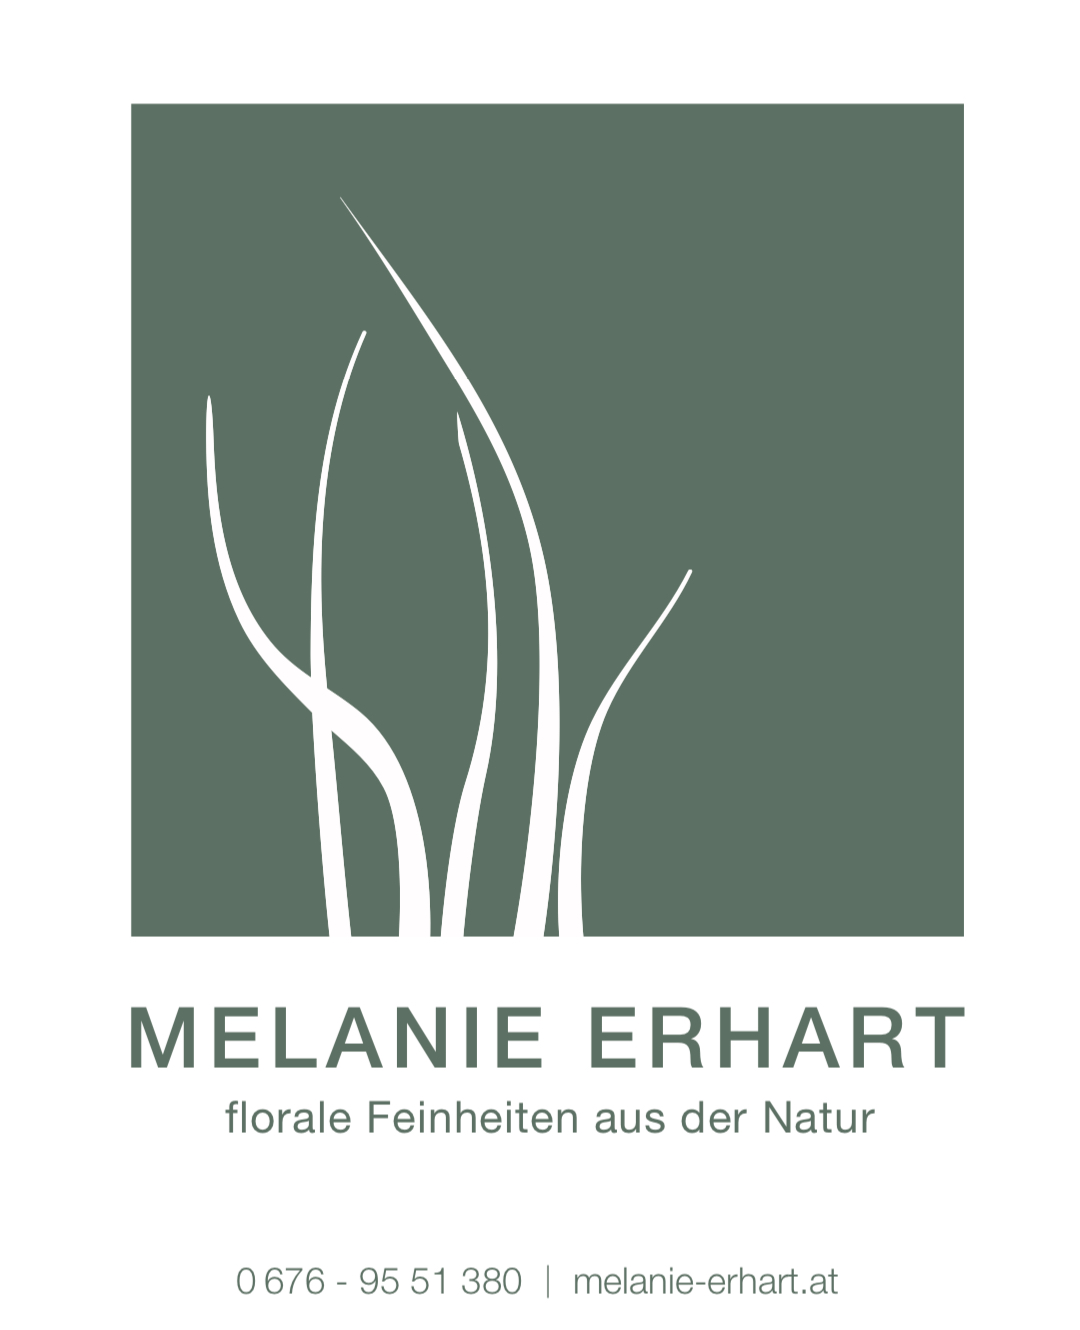 Melanie Erhart